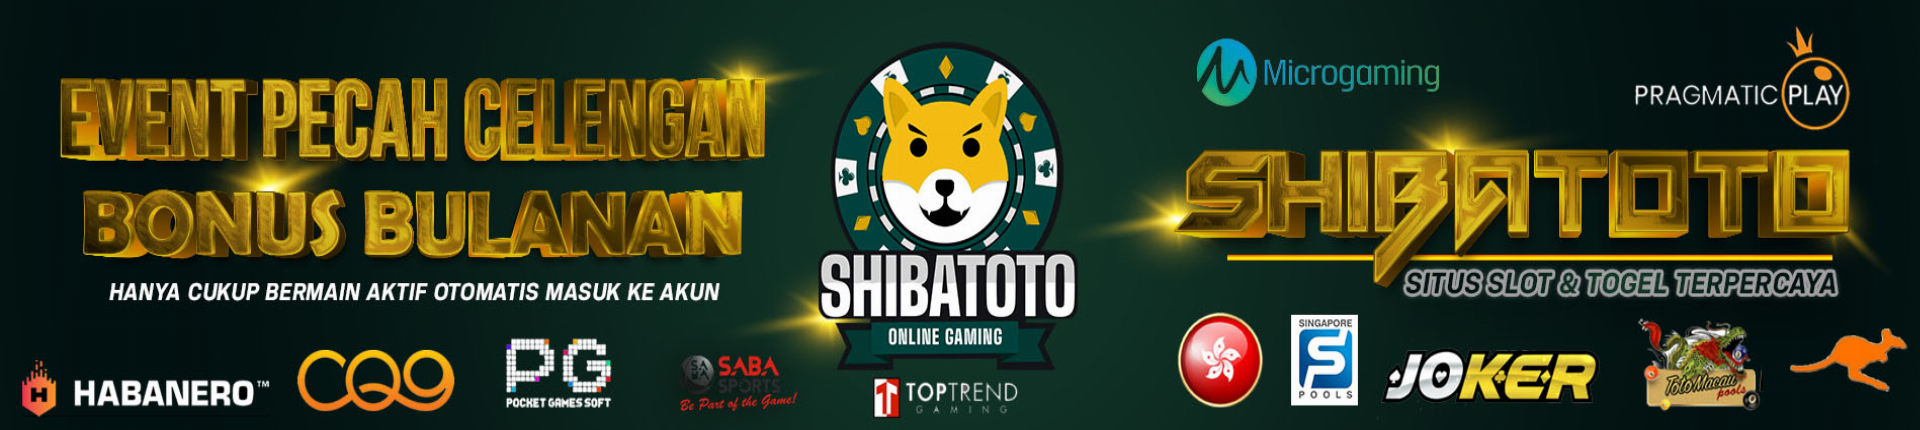 Shibatoto Situs Slot Nomor 1